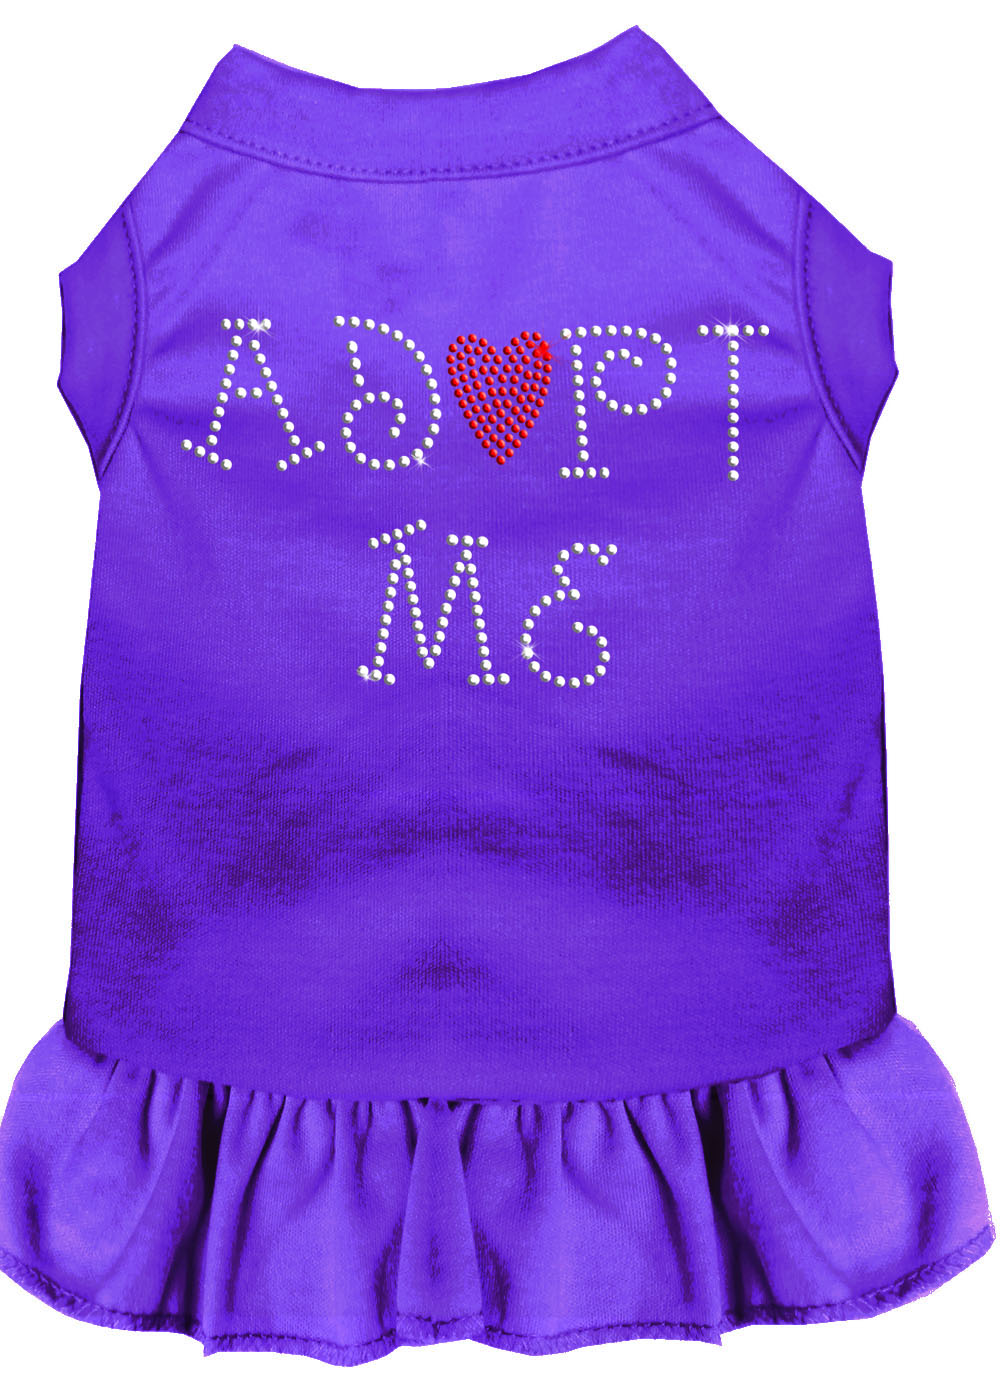 Adopt Me Rhinestone Dress Purple 4X